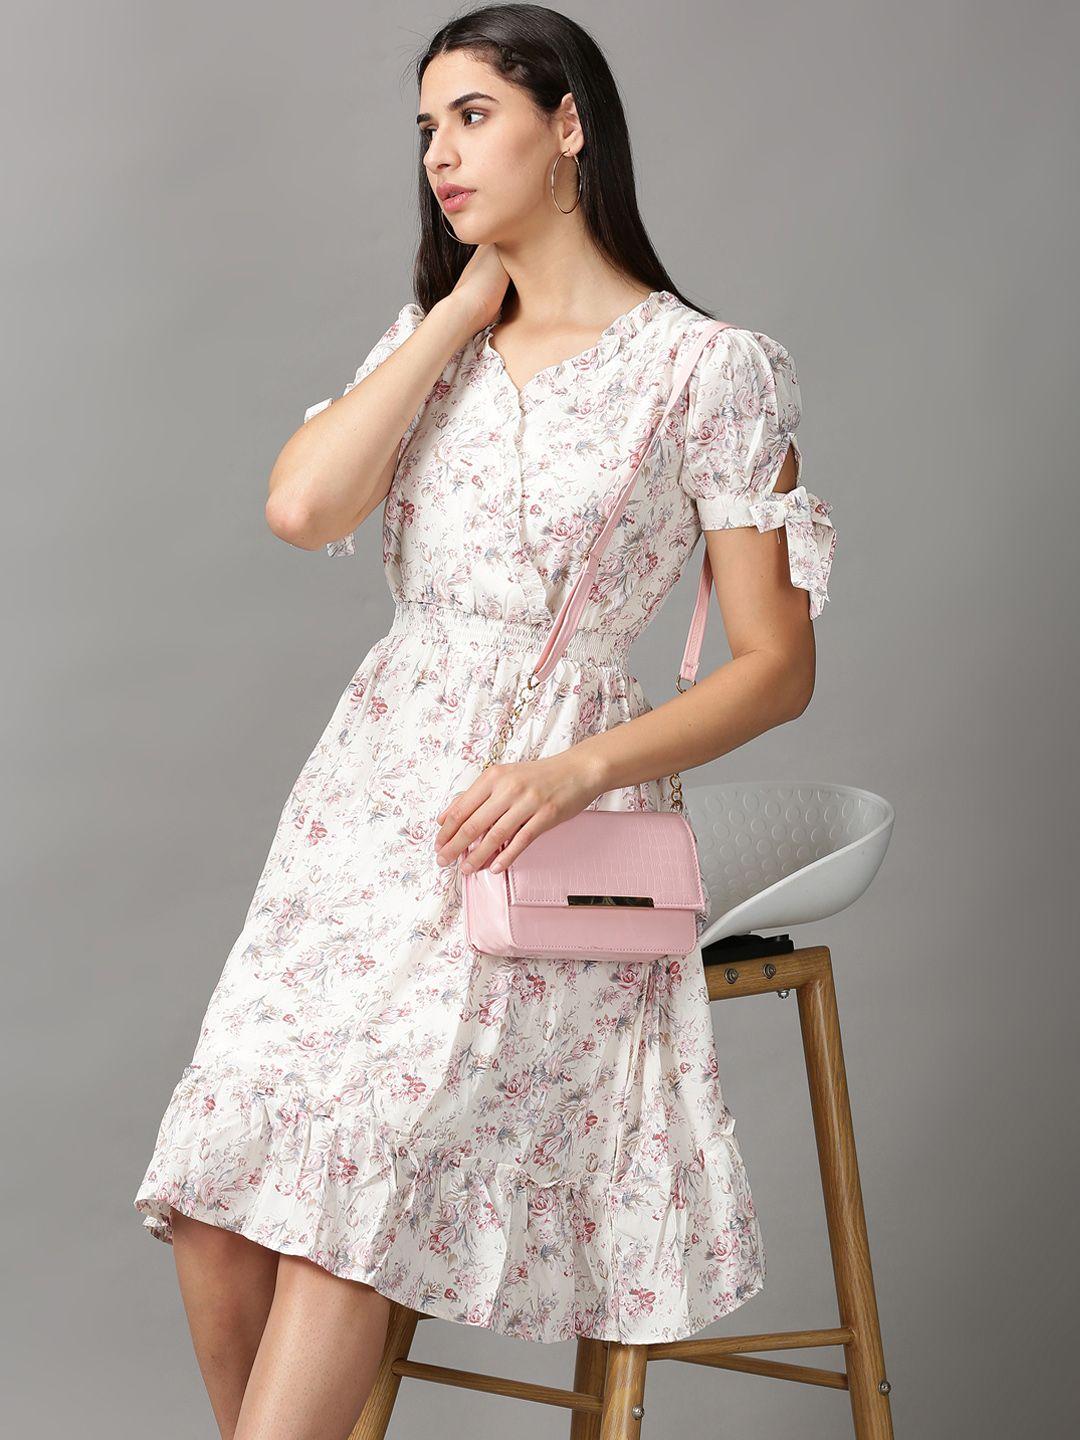 showoff cream-coloured & pink floral chiffon dress